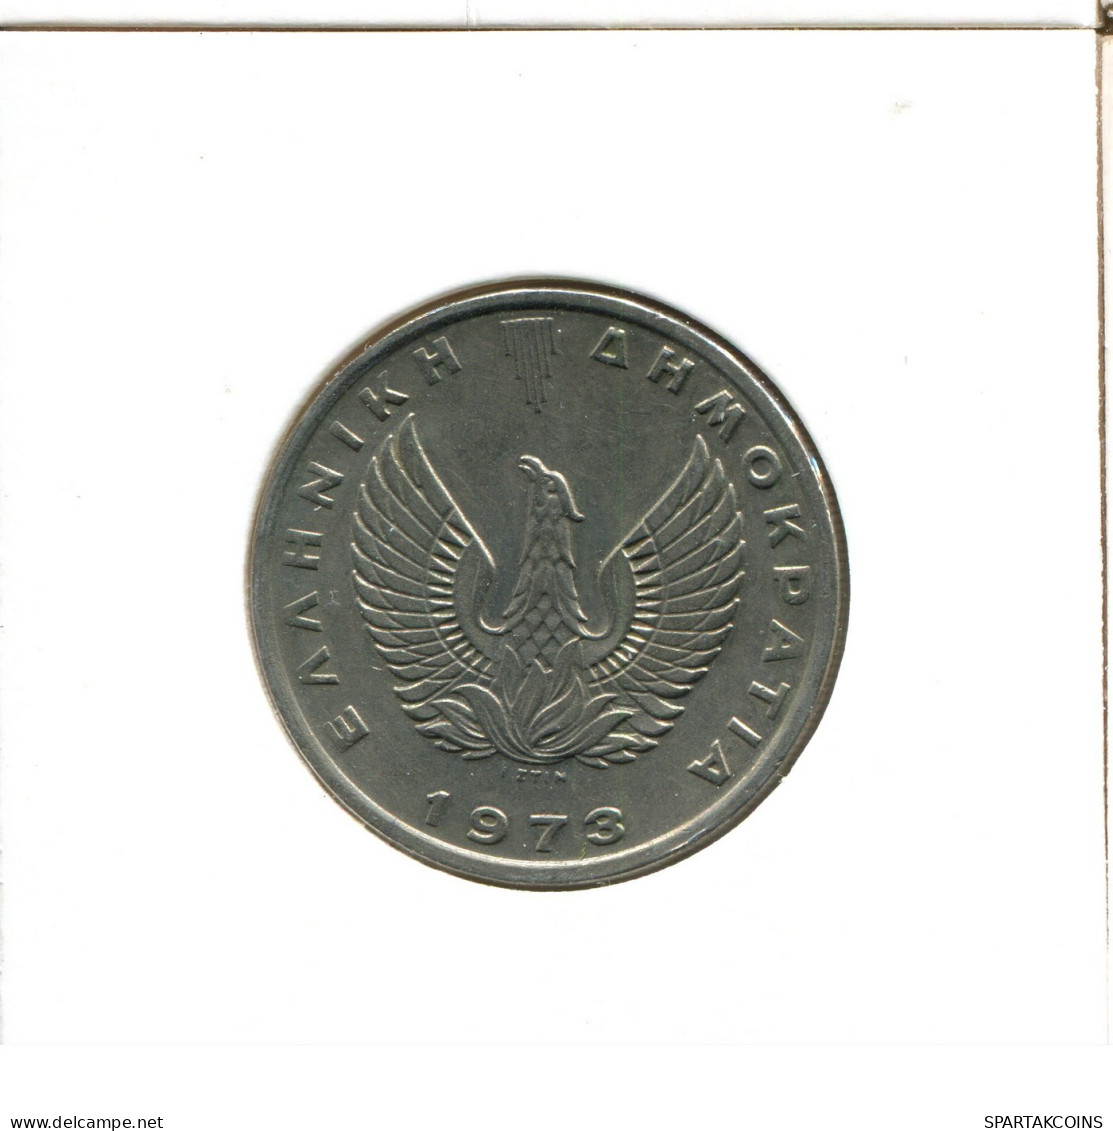 10 DRACHMES 1973 GRIECHENLAND GREECE Münze #AX648.D.A - Grecia